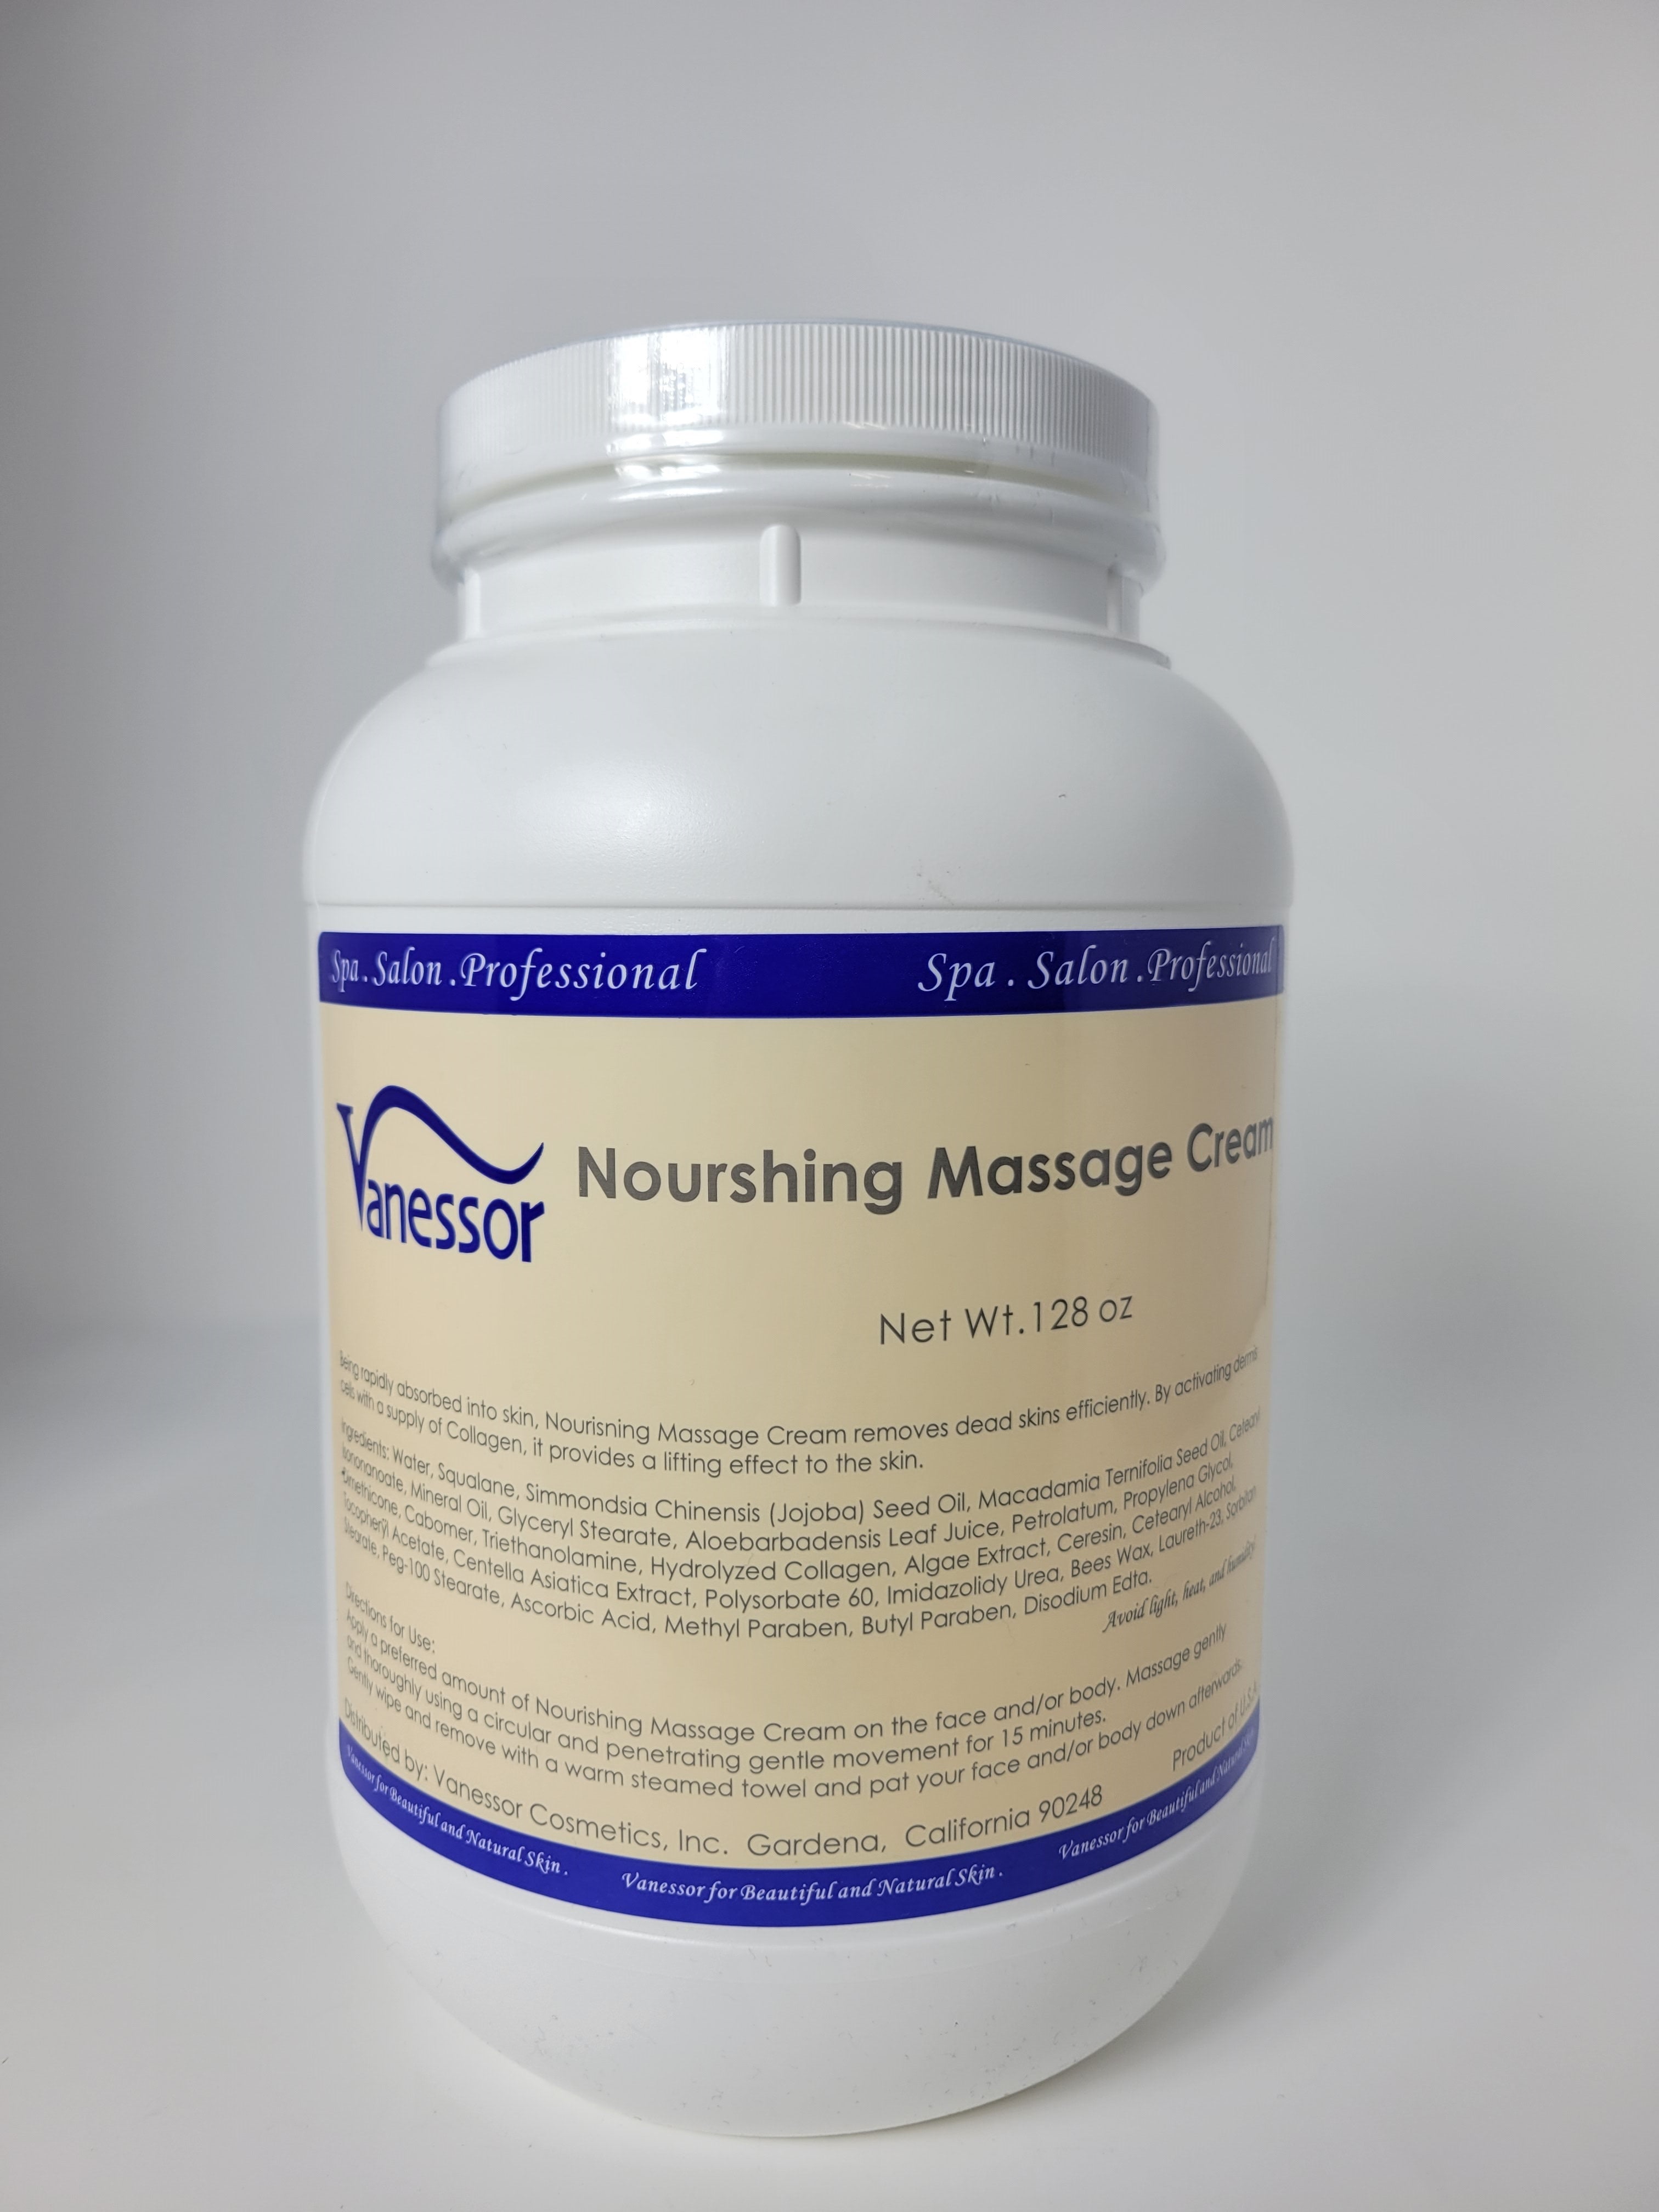 Vanessor Nourishing Massage Cream